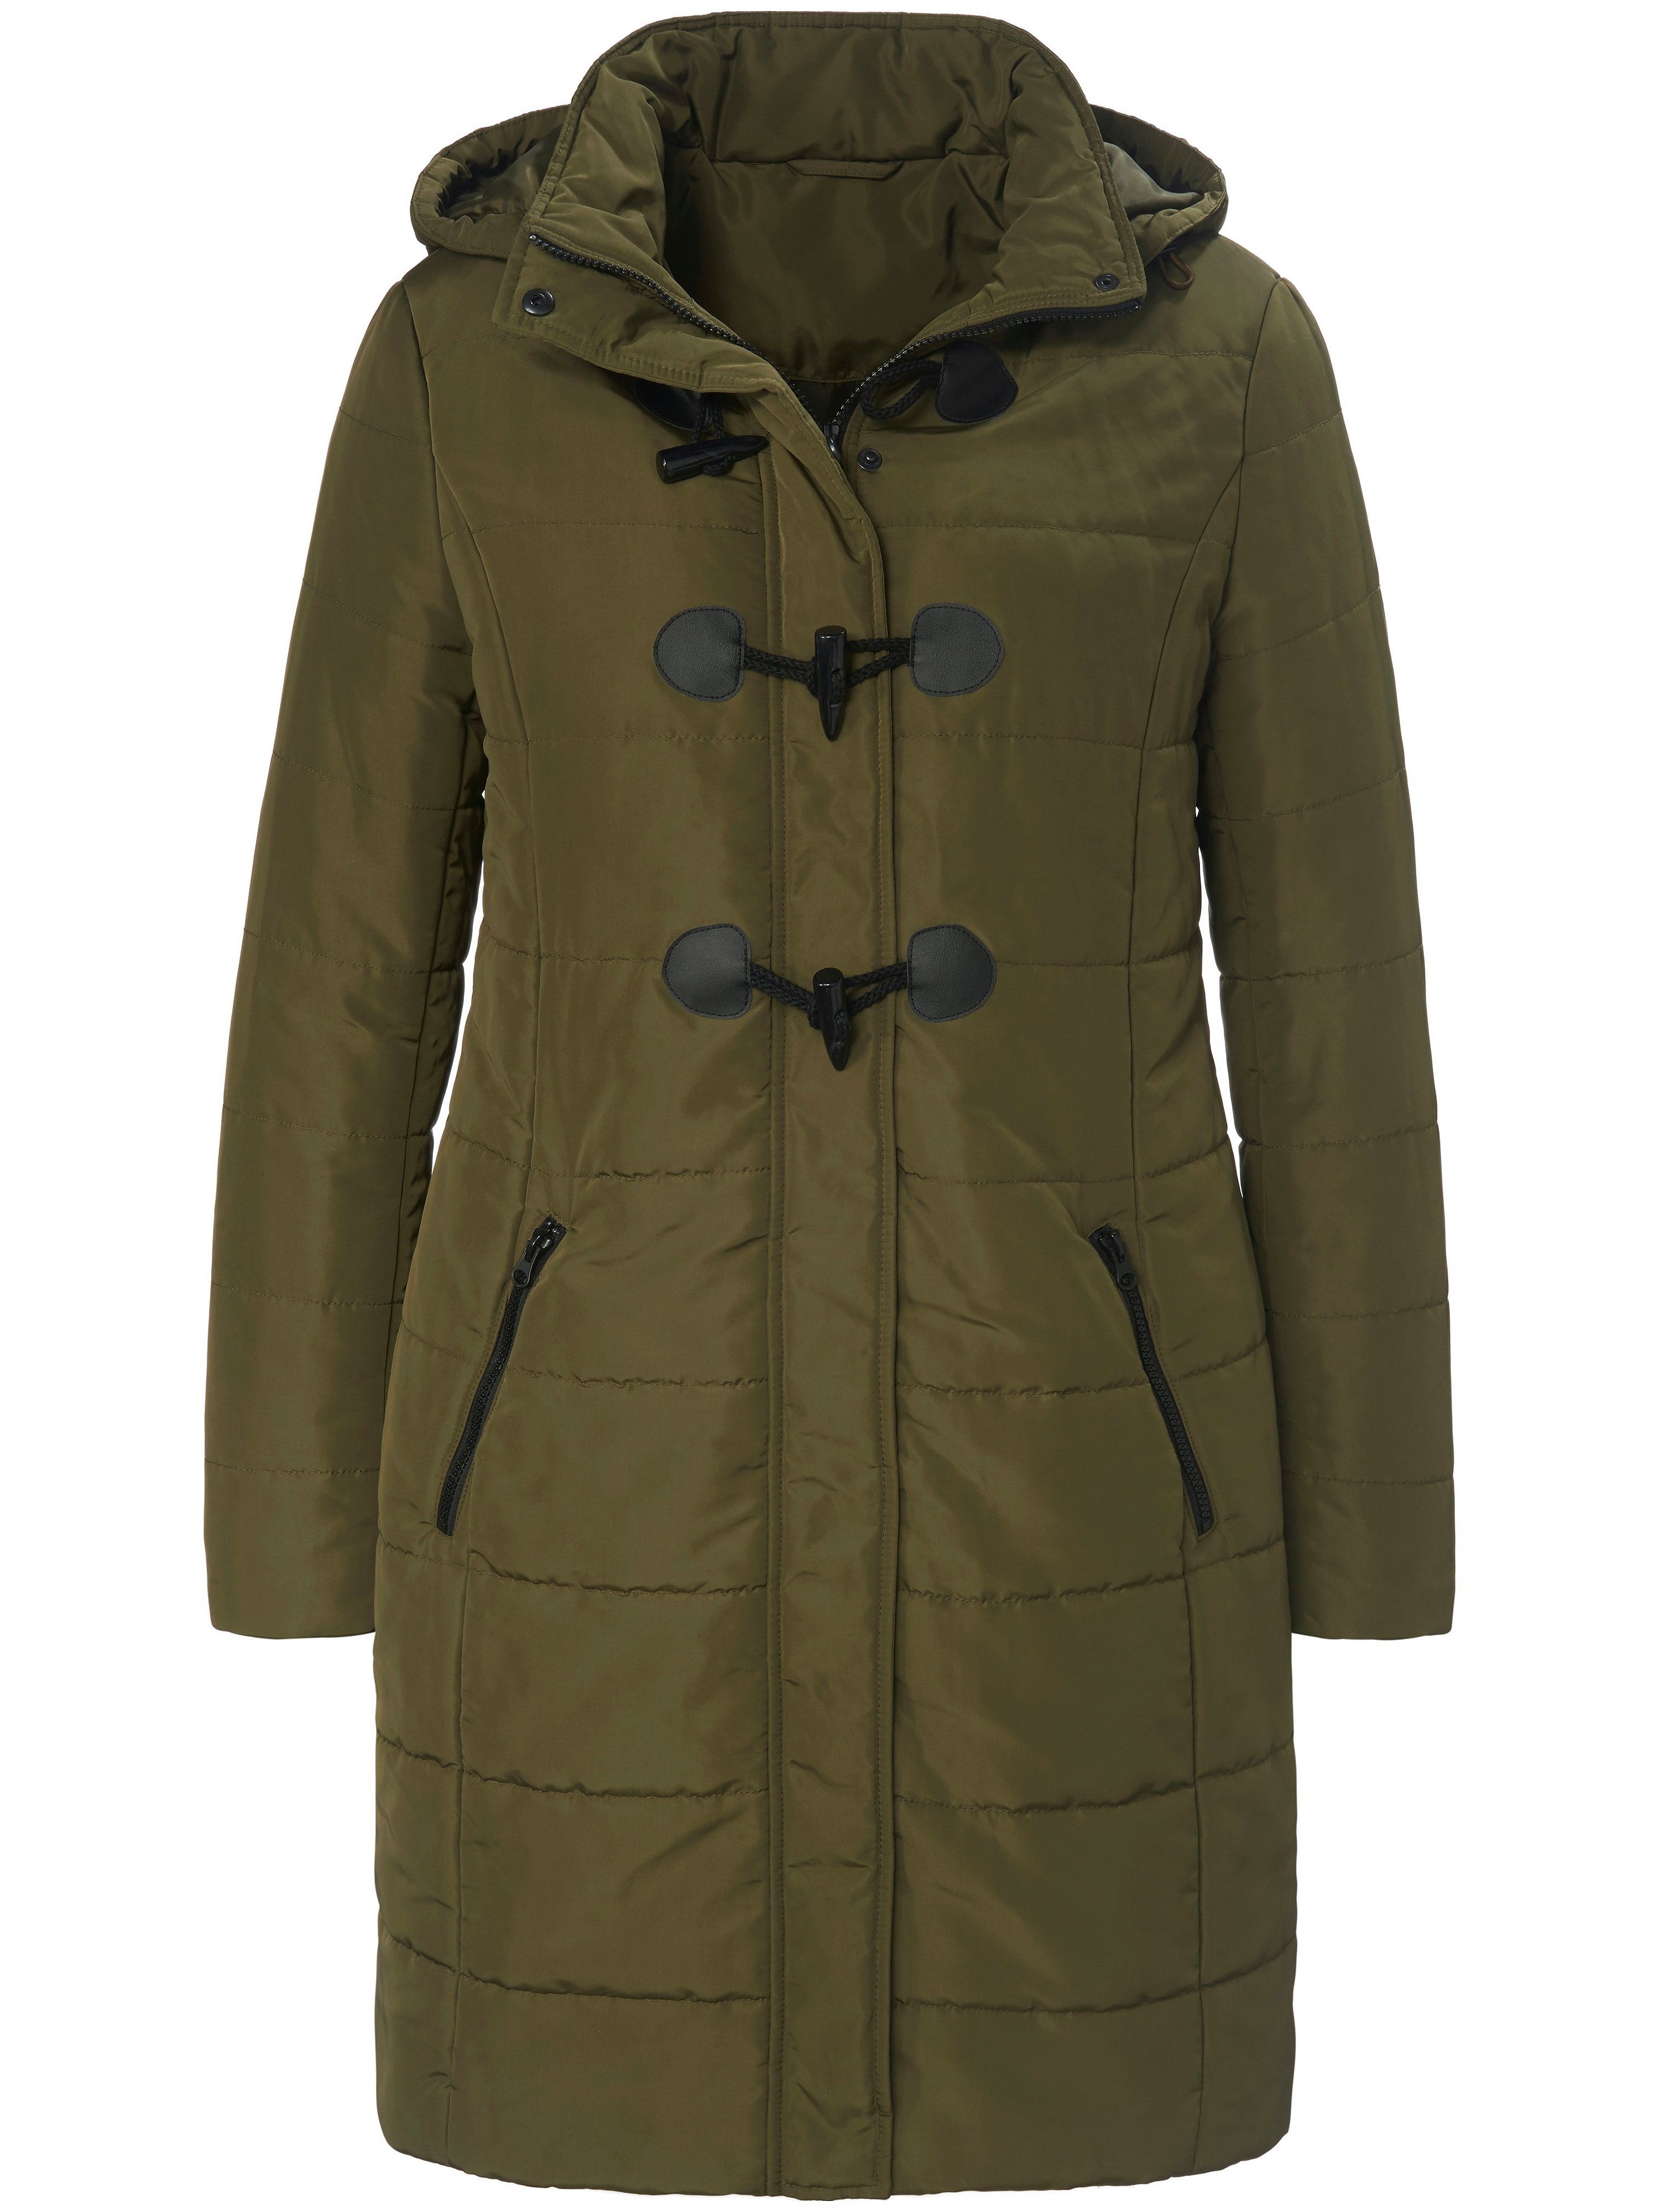 Le manteau matelassé style duffle-coat  Emilia Lay vert